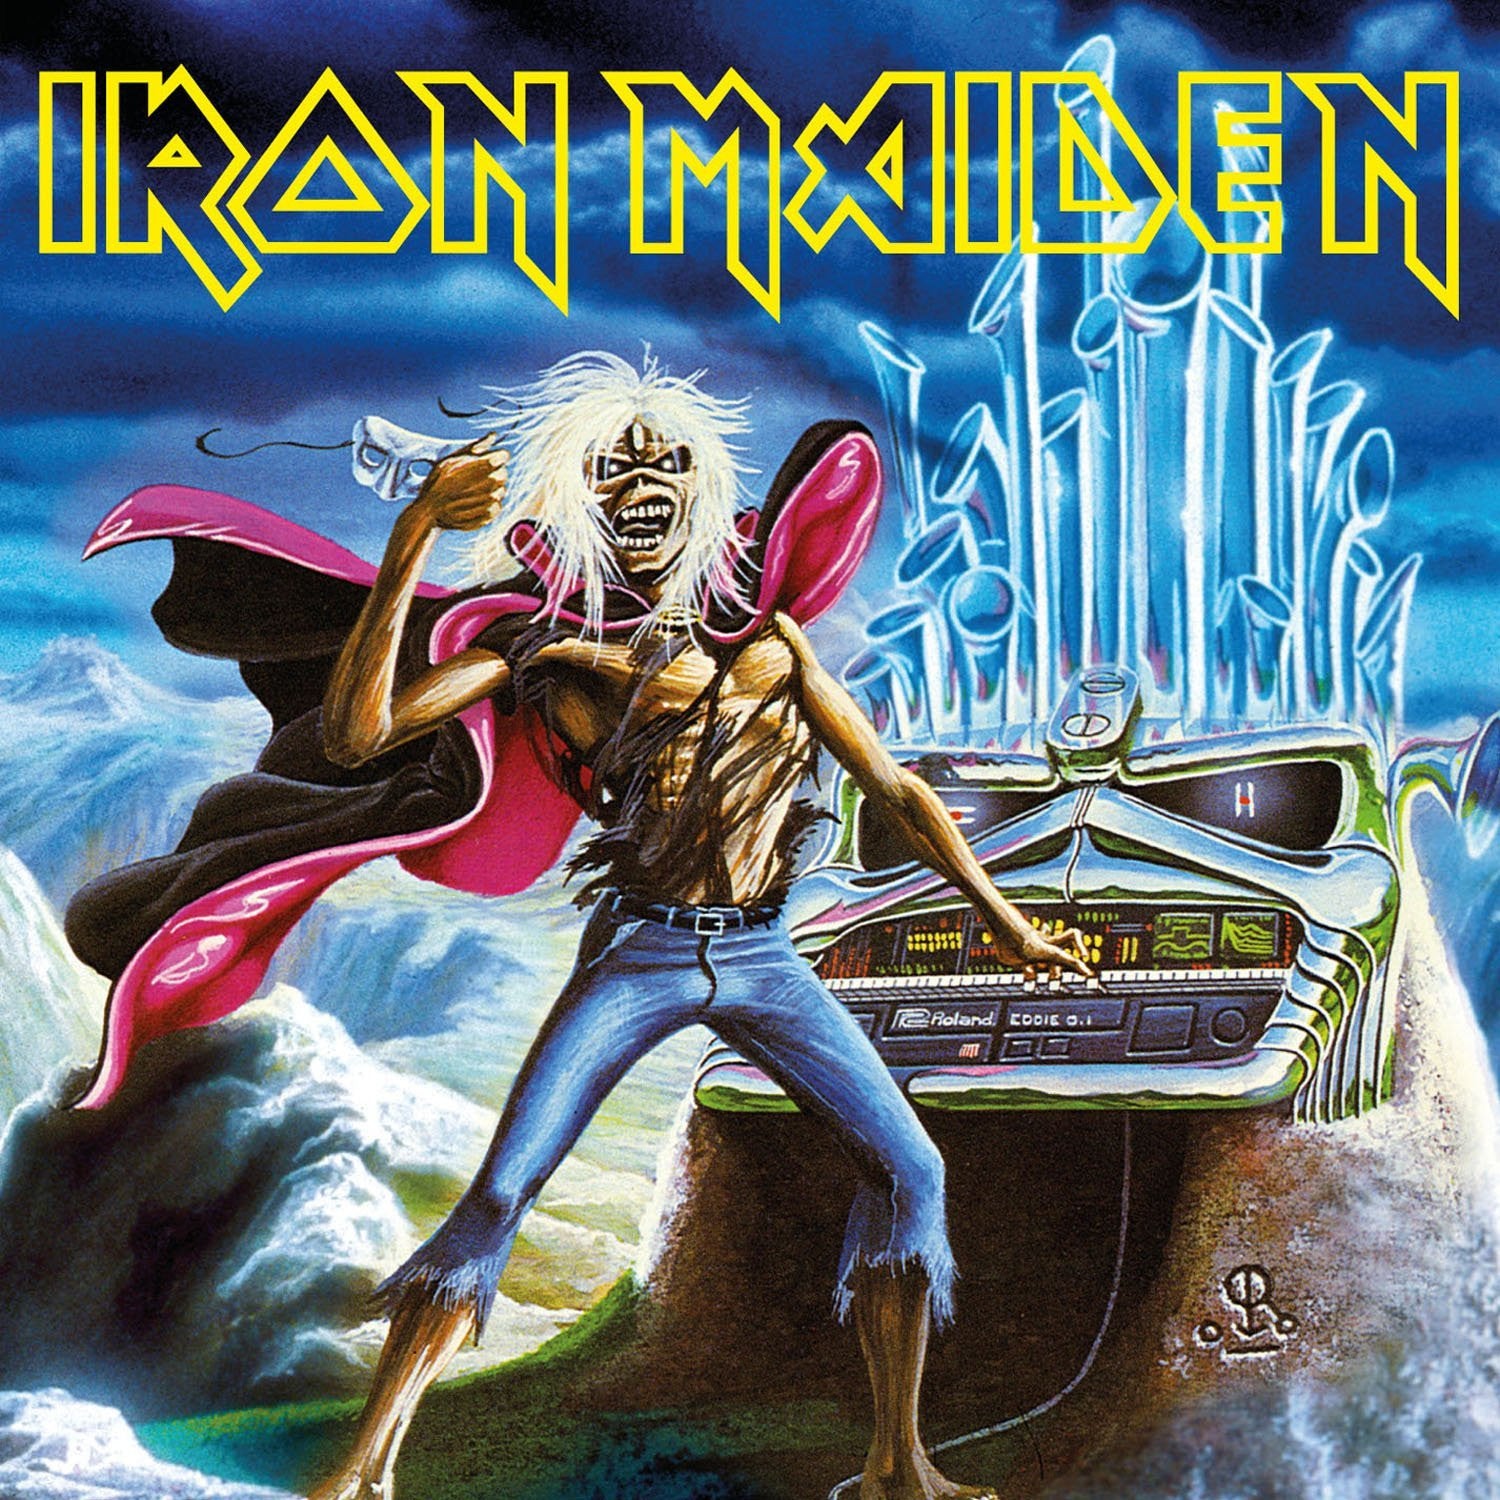 Iron Maiden - Run To The Hills (Live) 7